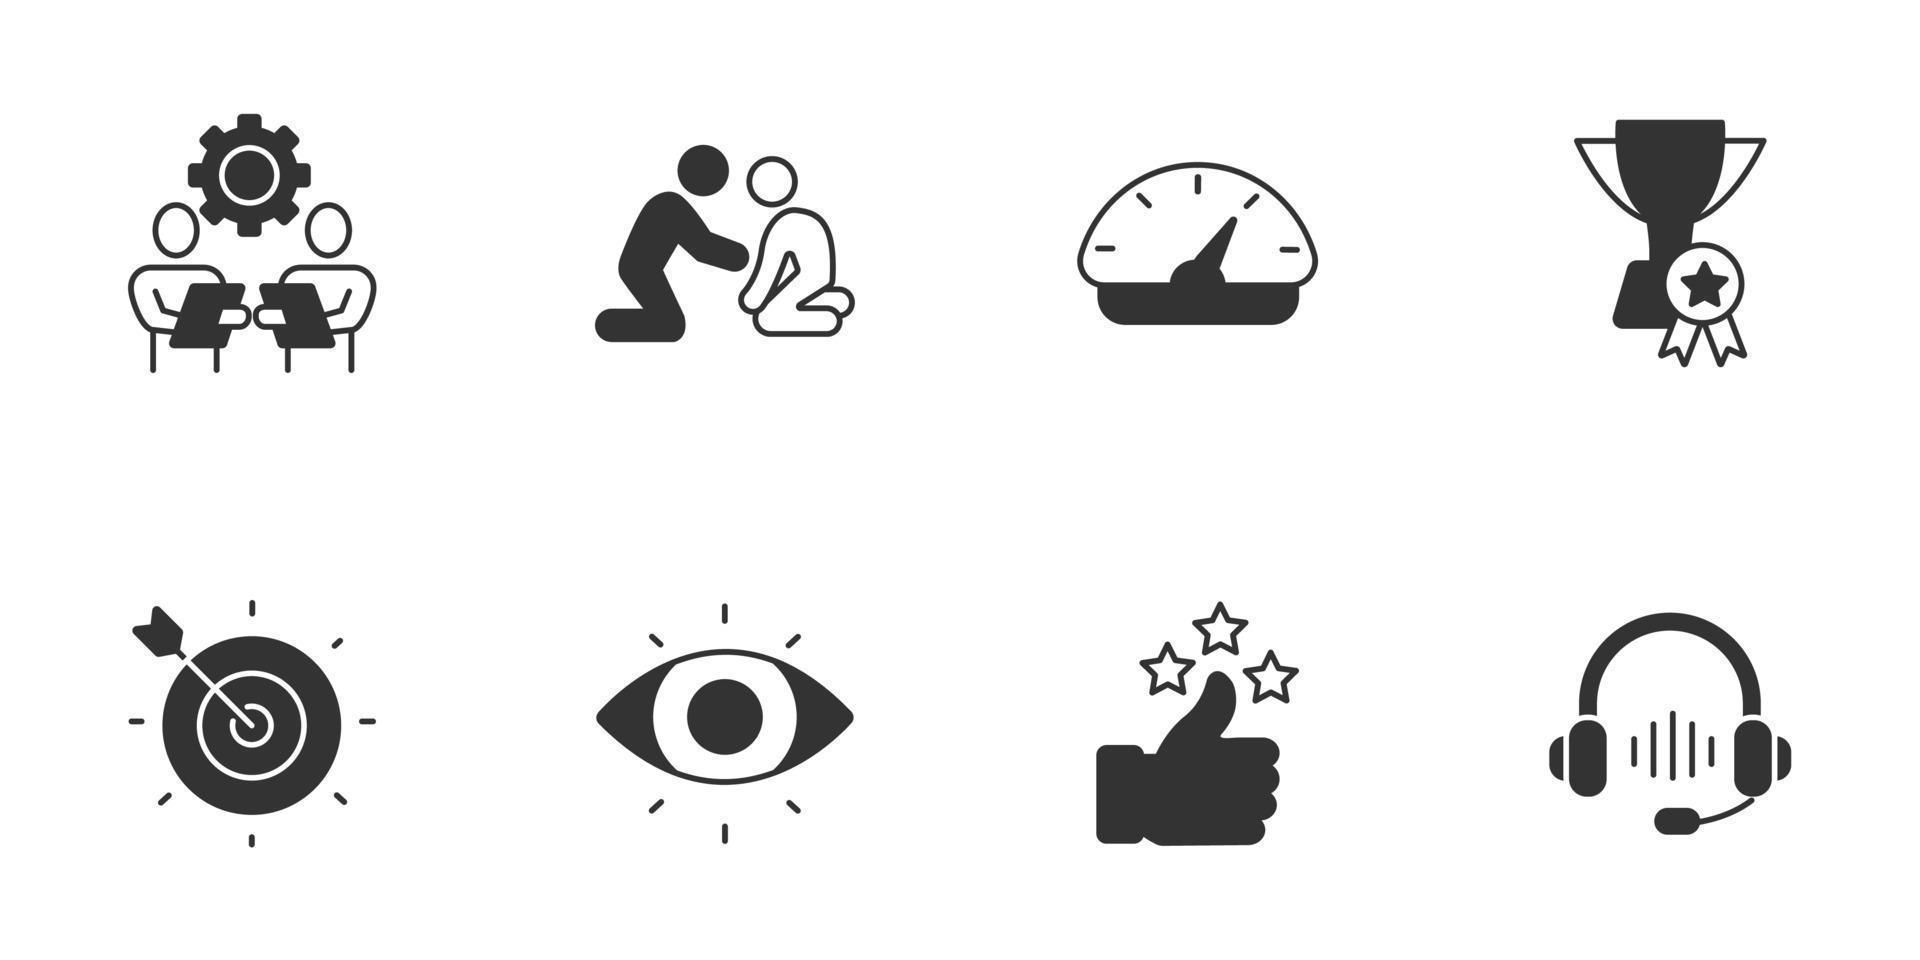 motivation icons set . motivation pack symbol vector elements for infographic web